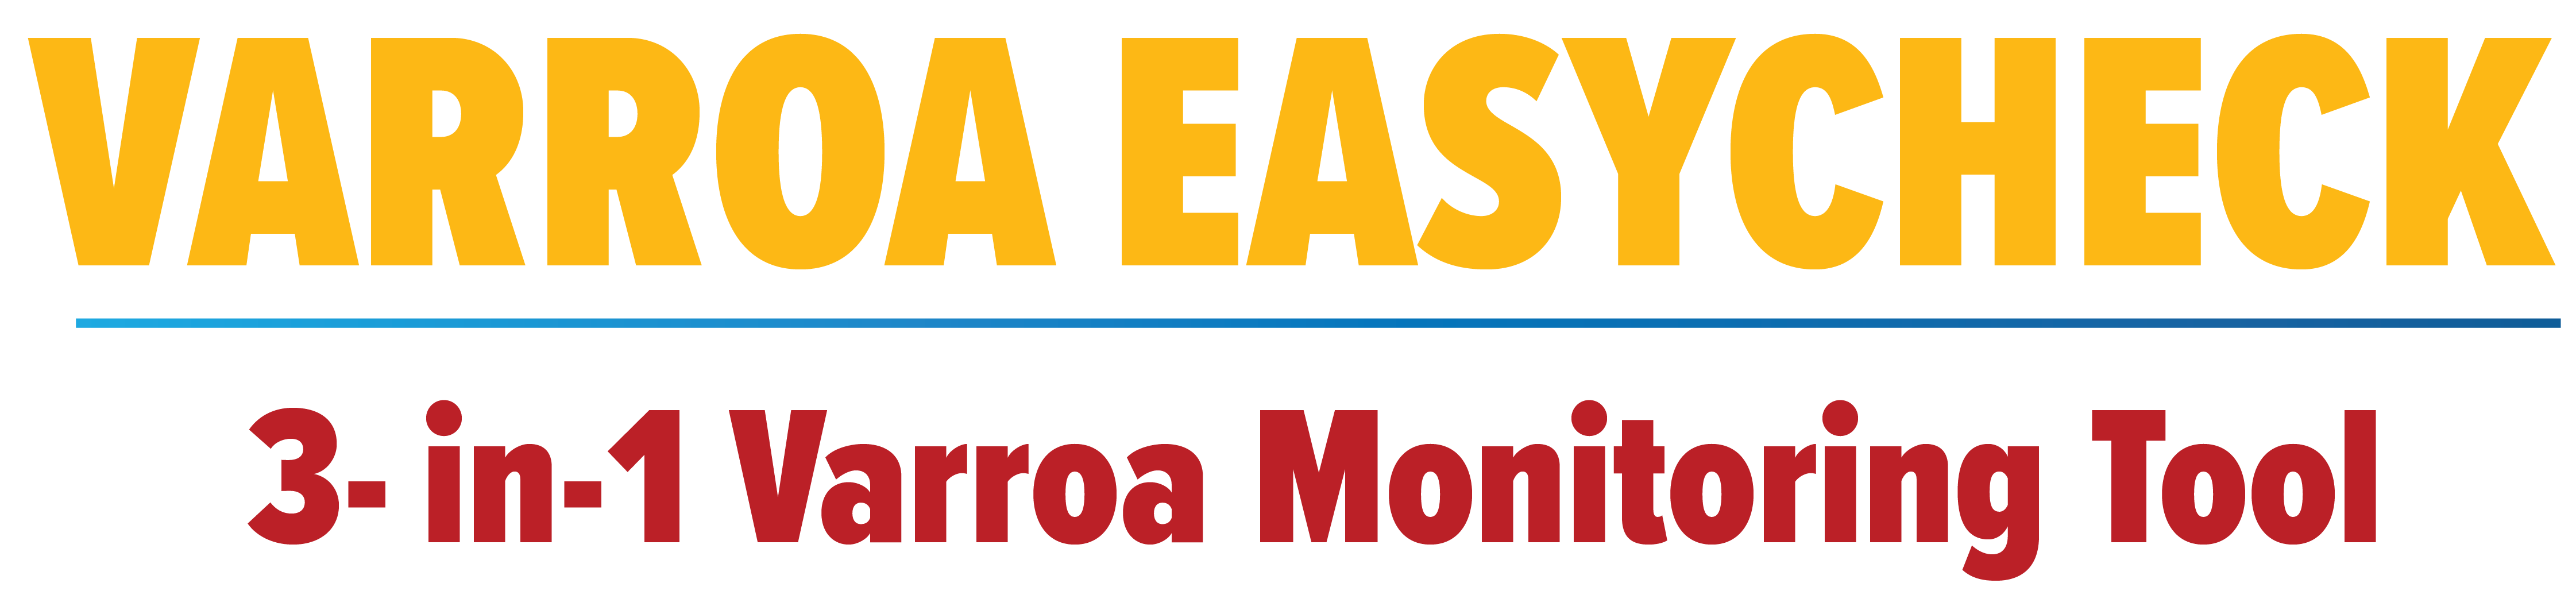 Varroa EasyCheck, Mann Lake Ltd